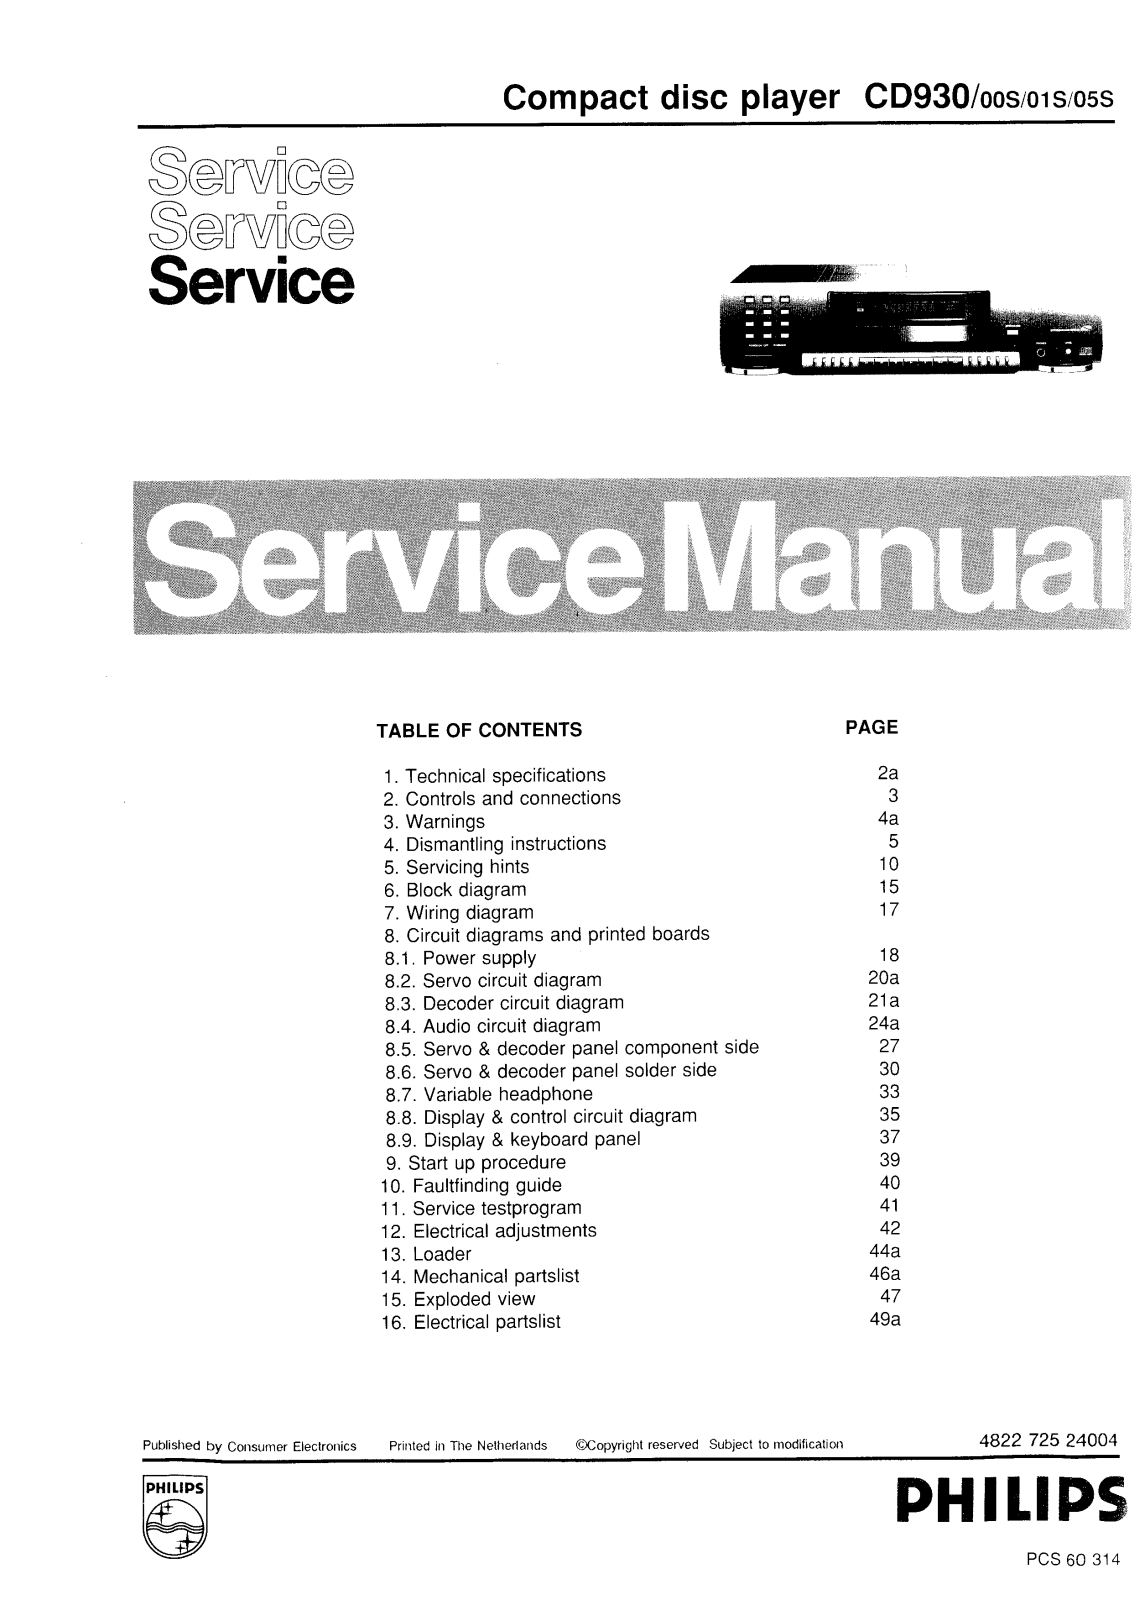 Philips CD-930 Service manual